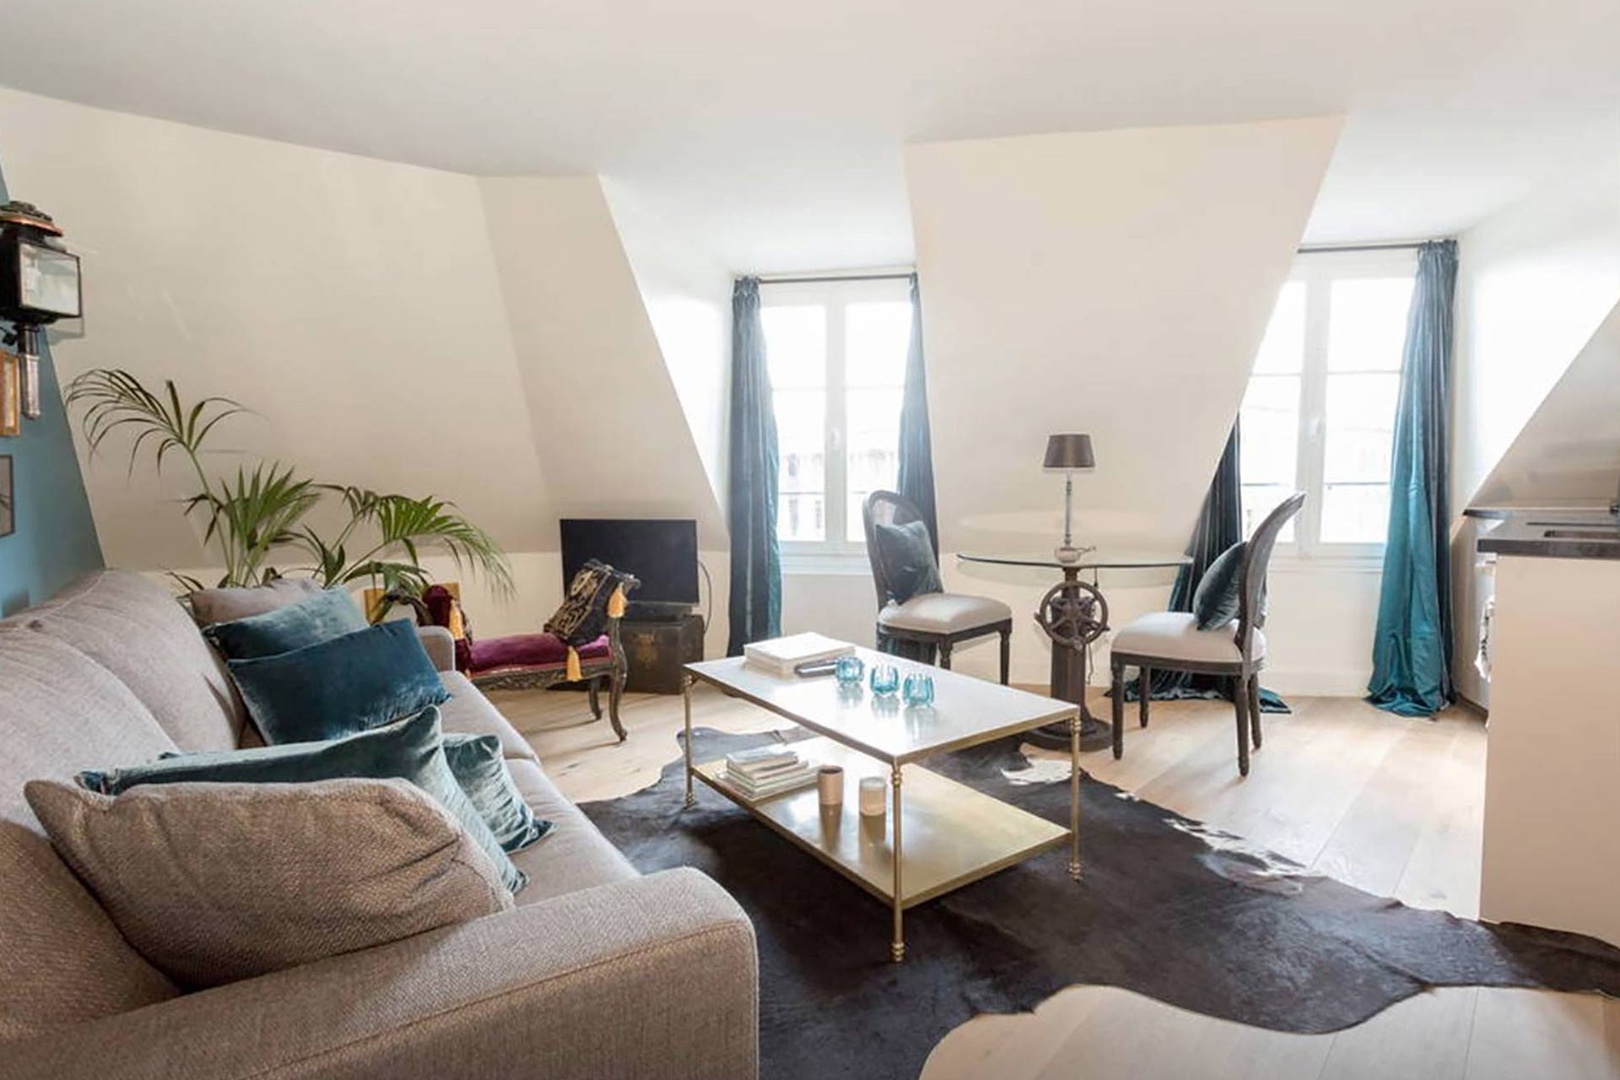 Open plan living room with Parisian dormer windows.